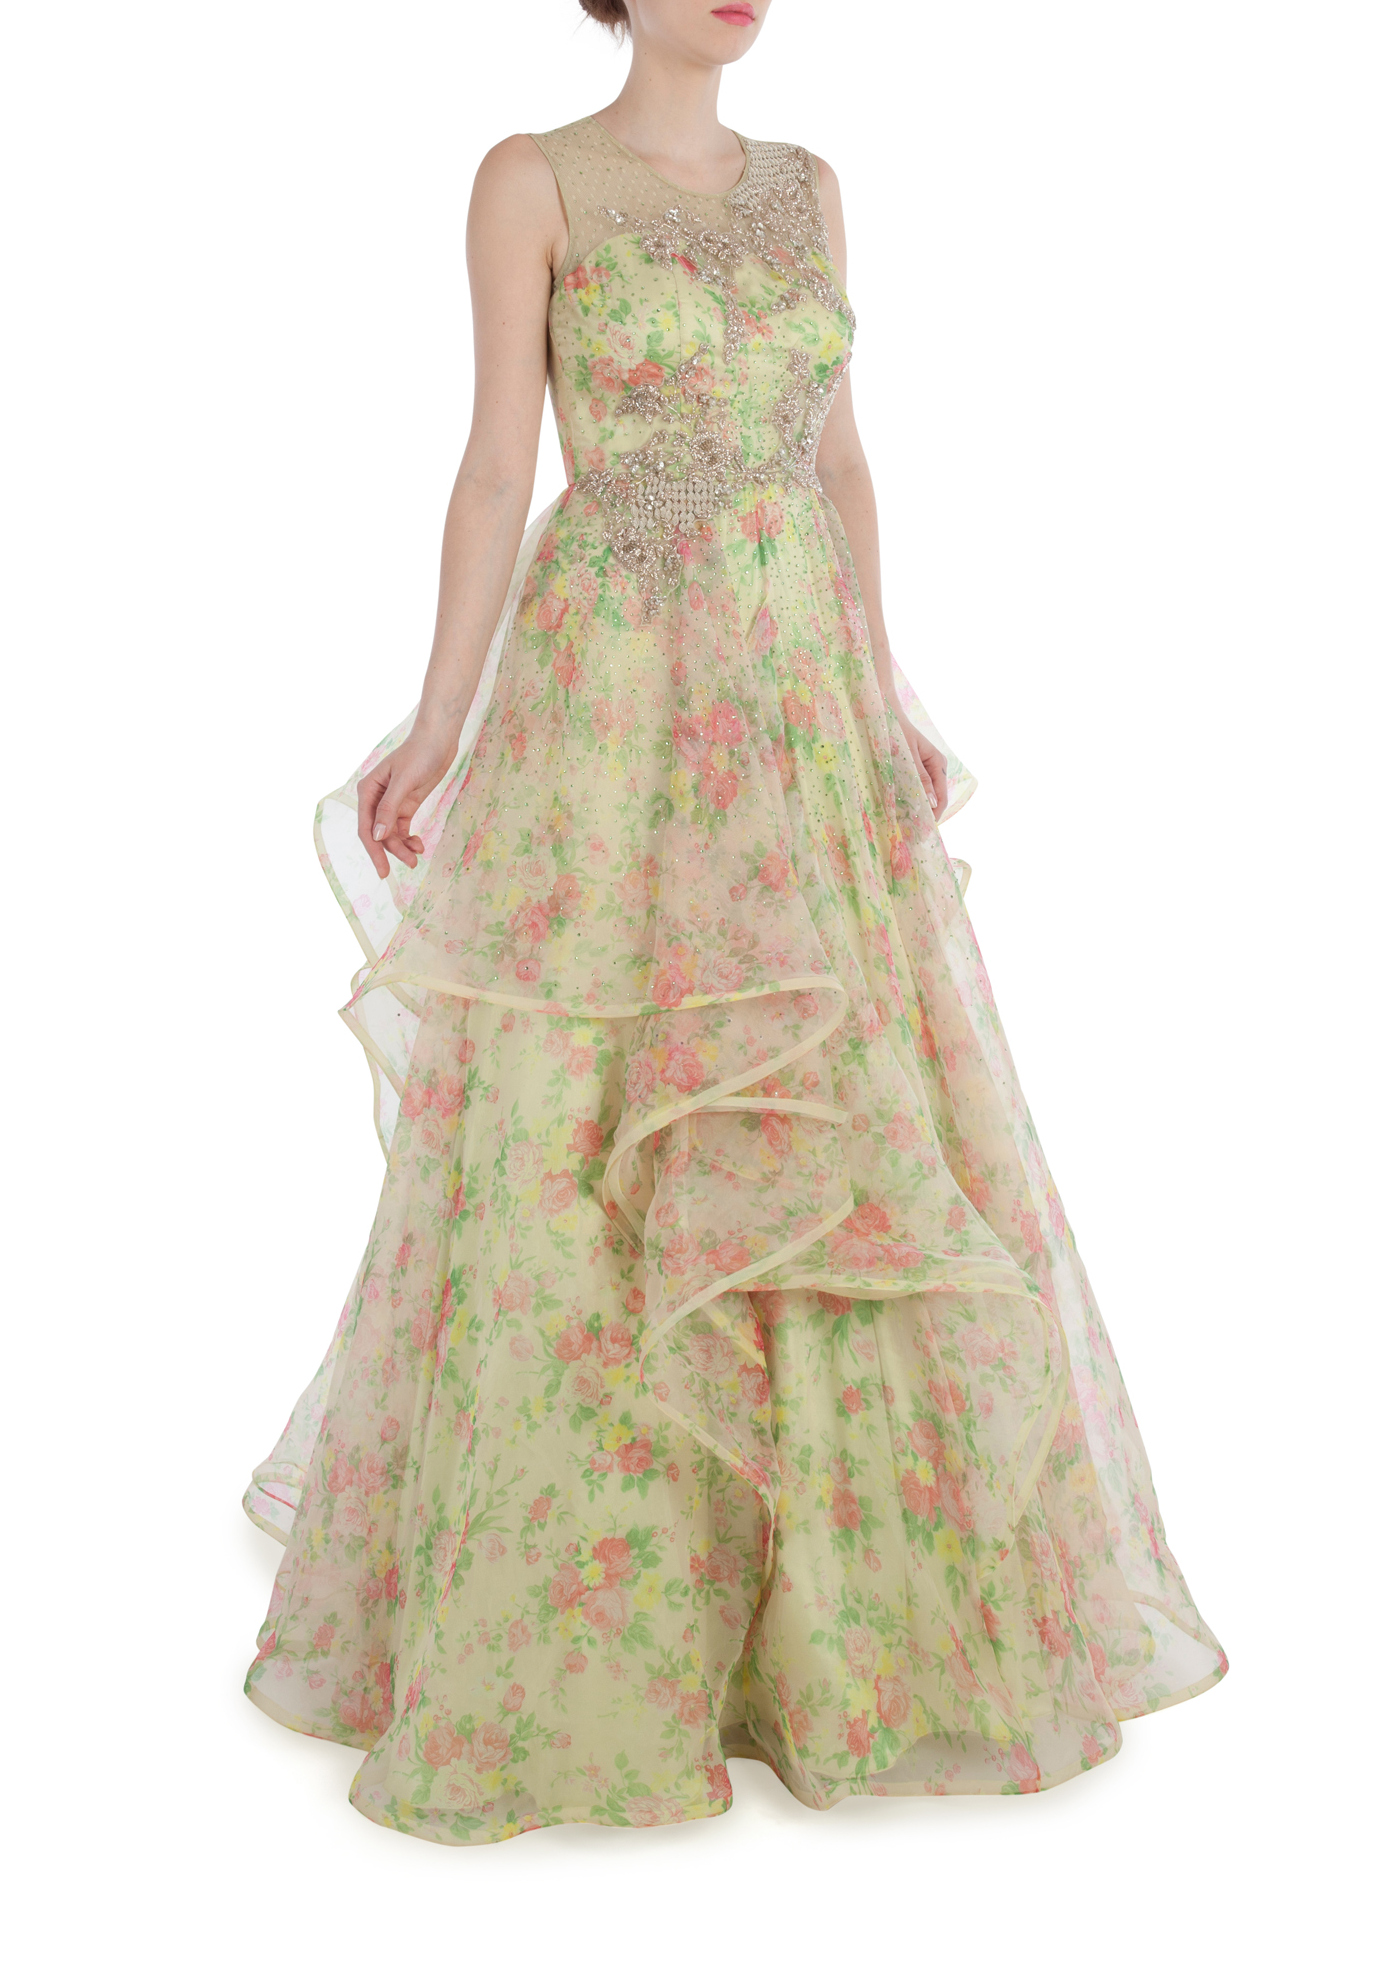 Alentejo spring floral gown by Dolly J | The Secret Label